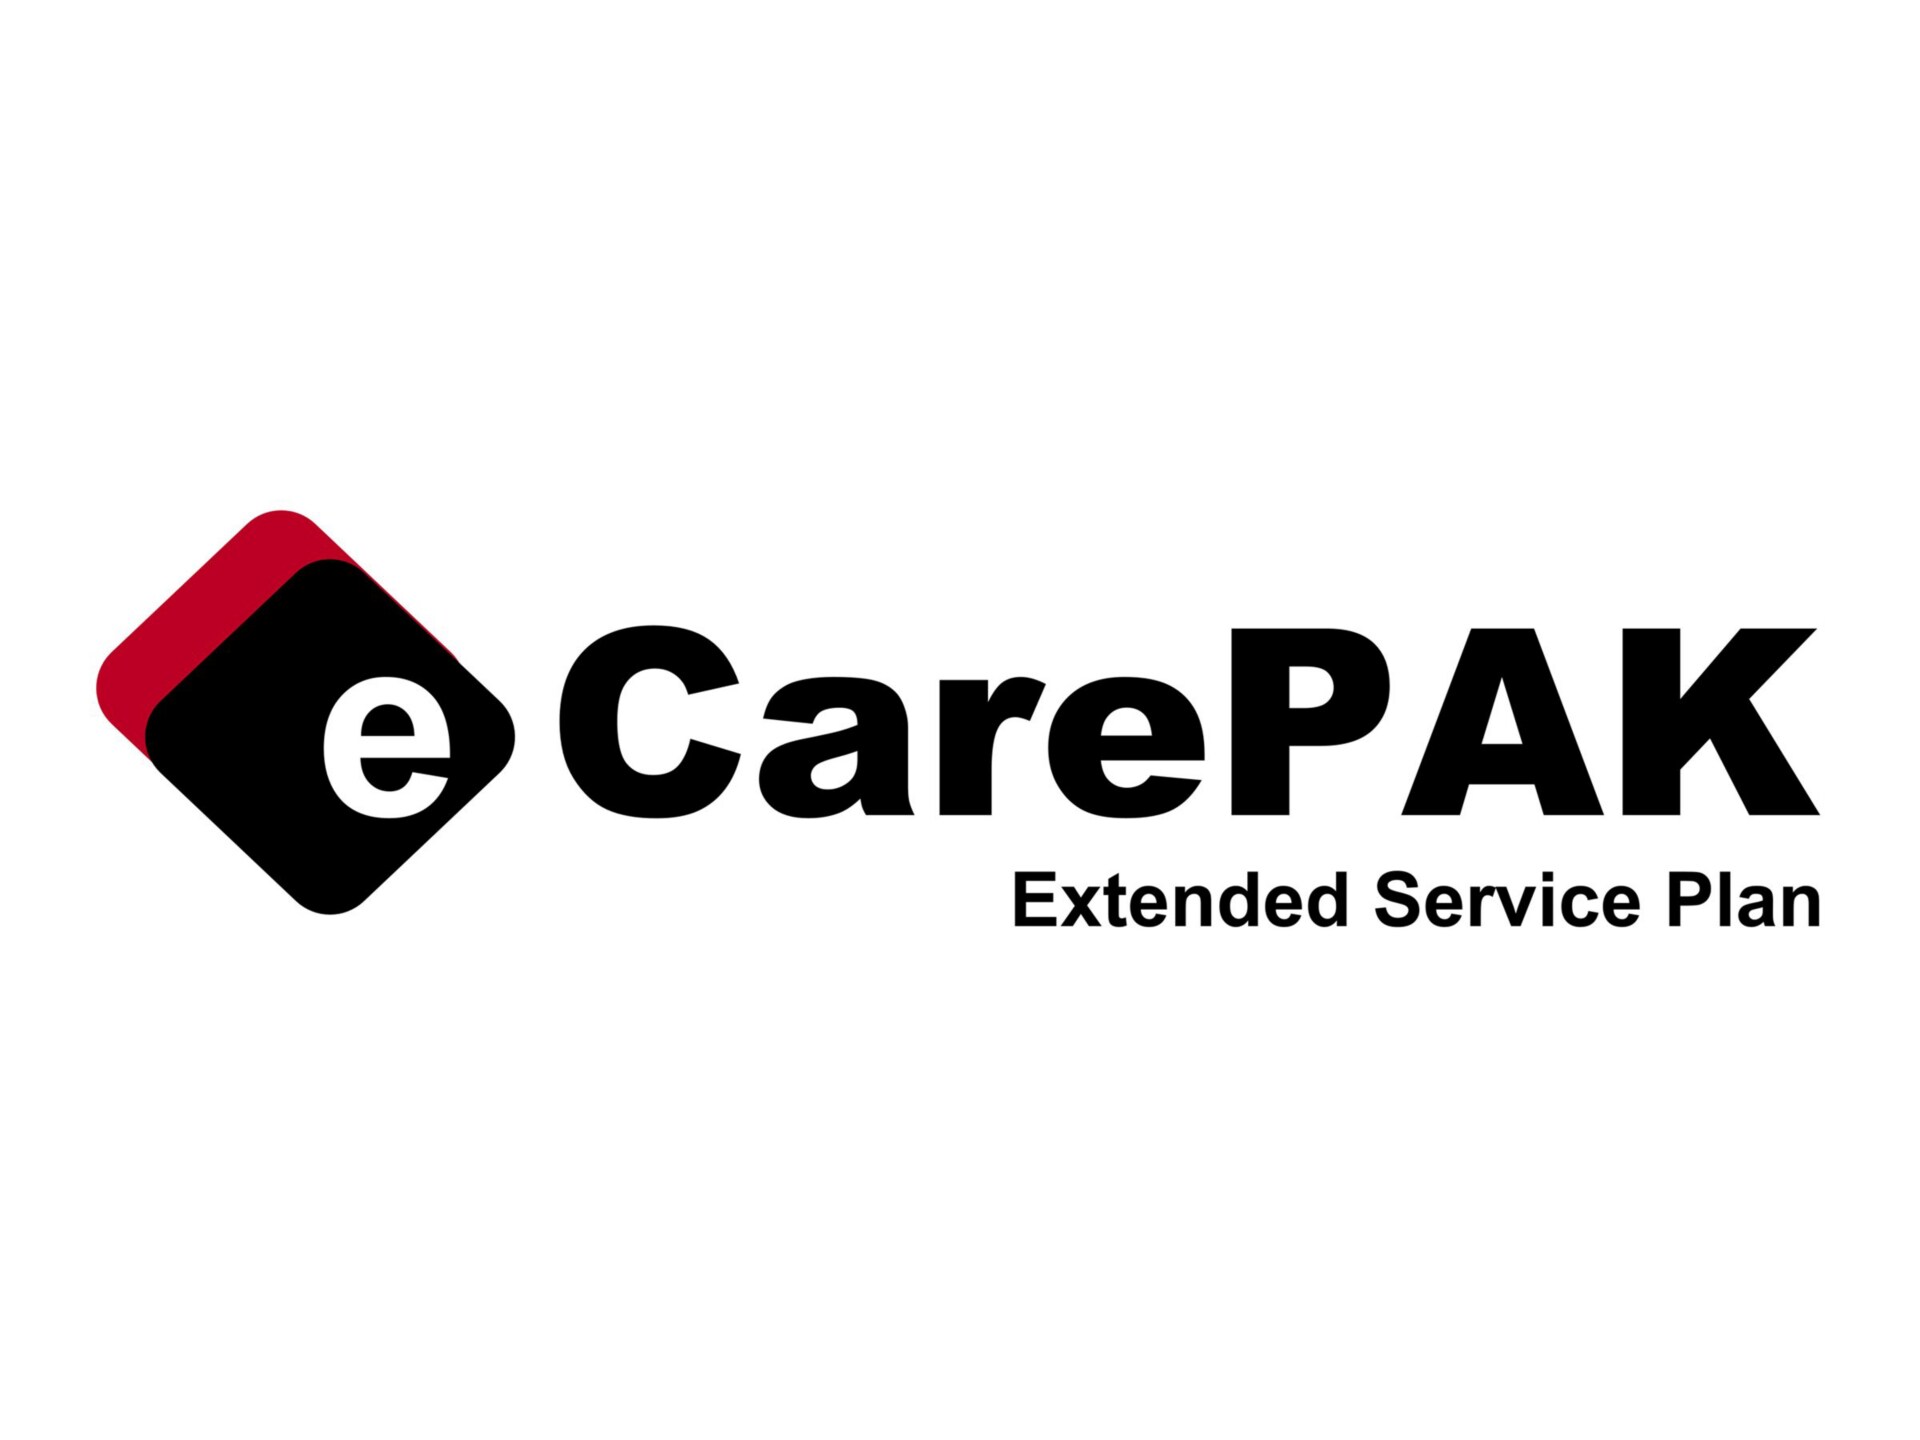 Canon eCarePAK Extended Service Plan Advanced Exchange Program - extended service agreement - 3 years